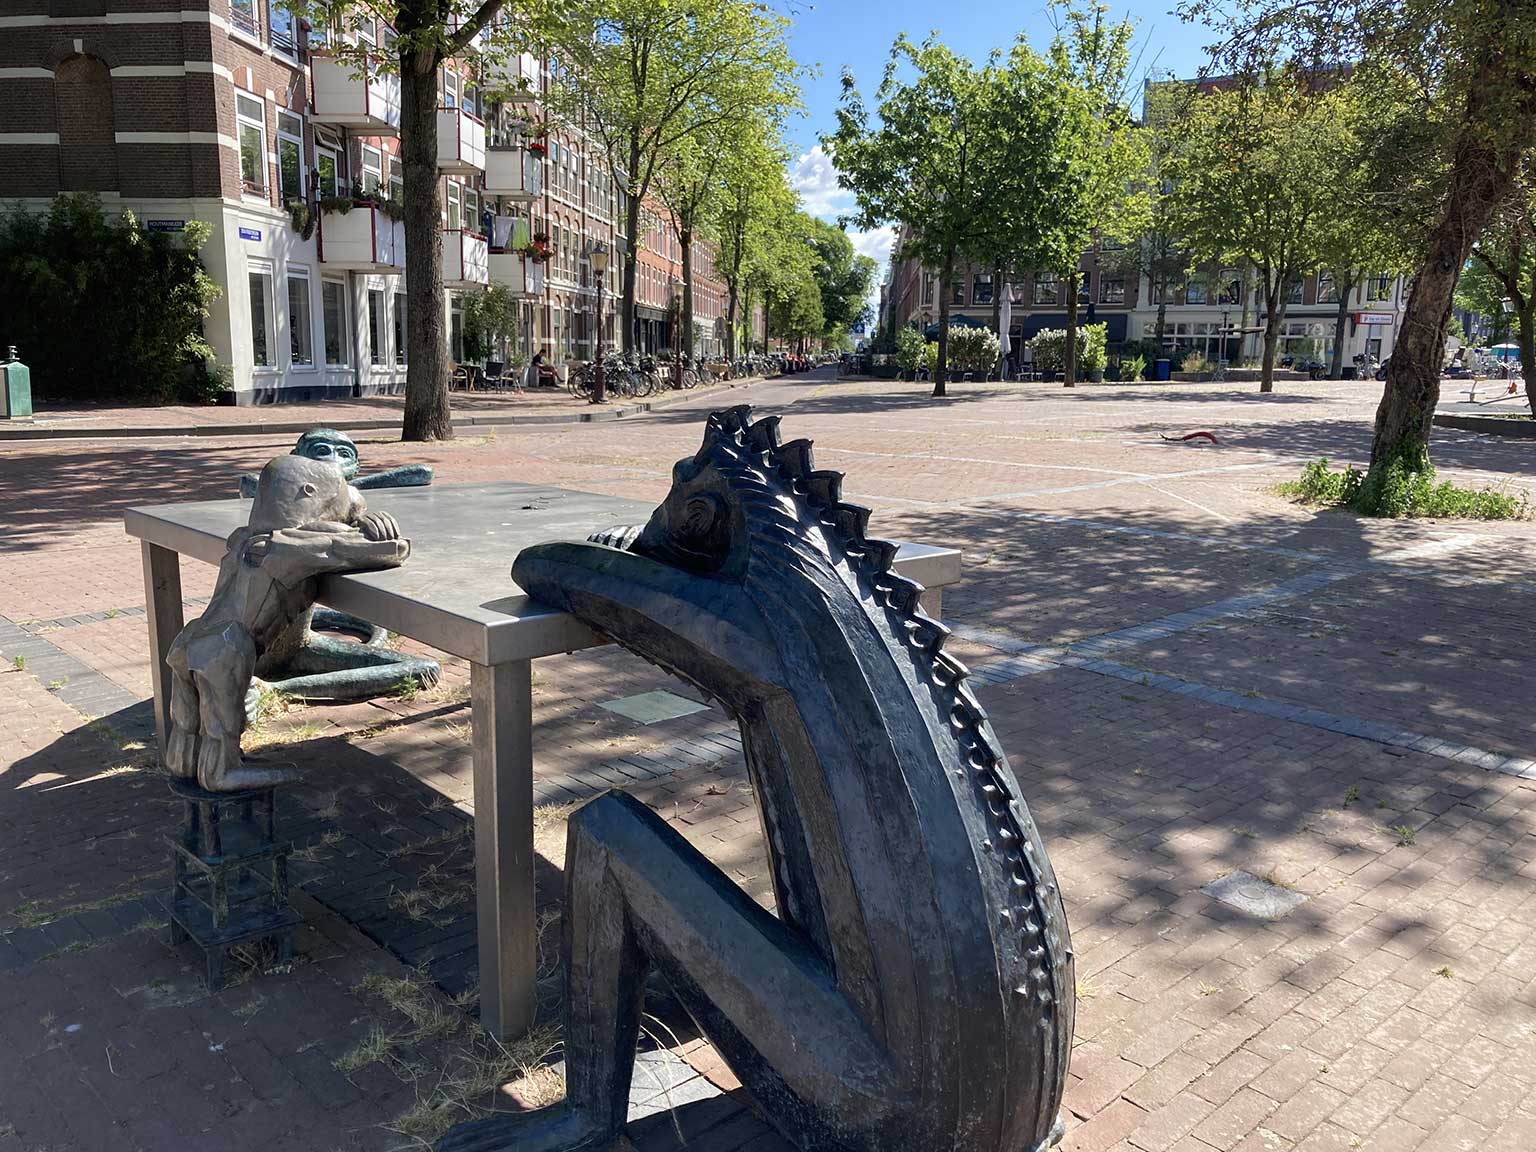 Artwork Monkey Table by Merijn Bolink on Zoutkeetsplein, Amsterdam